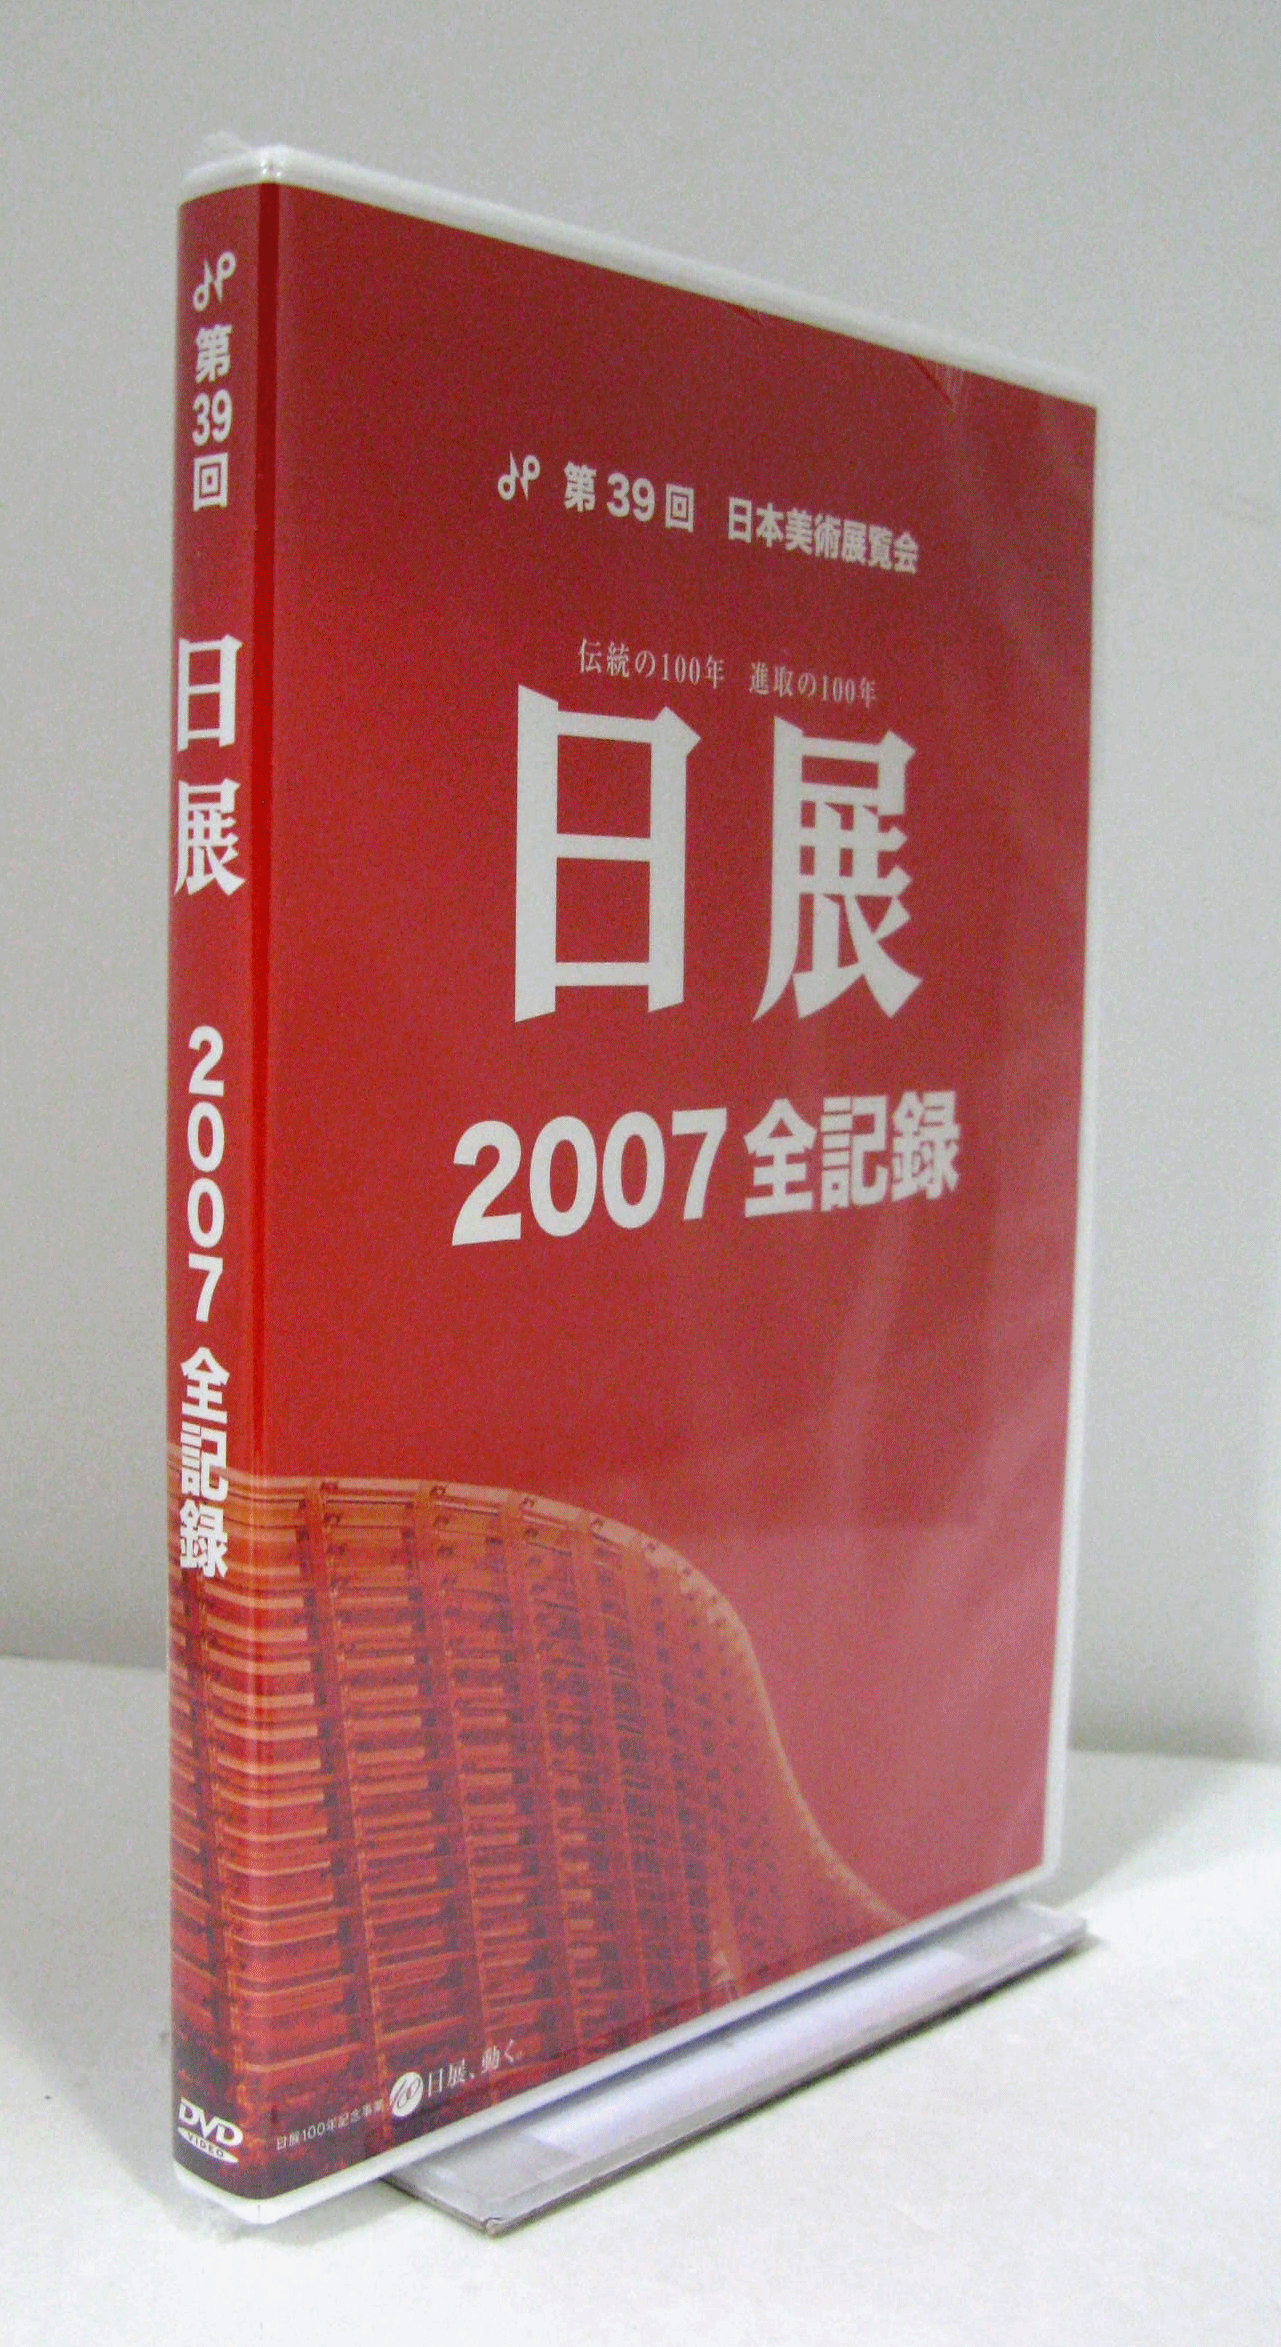 DVD:日展2007全記録 第39回日本美術展覧会 : 伝統の100年進取の100年